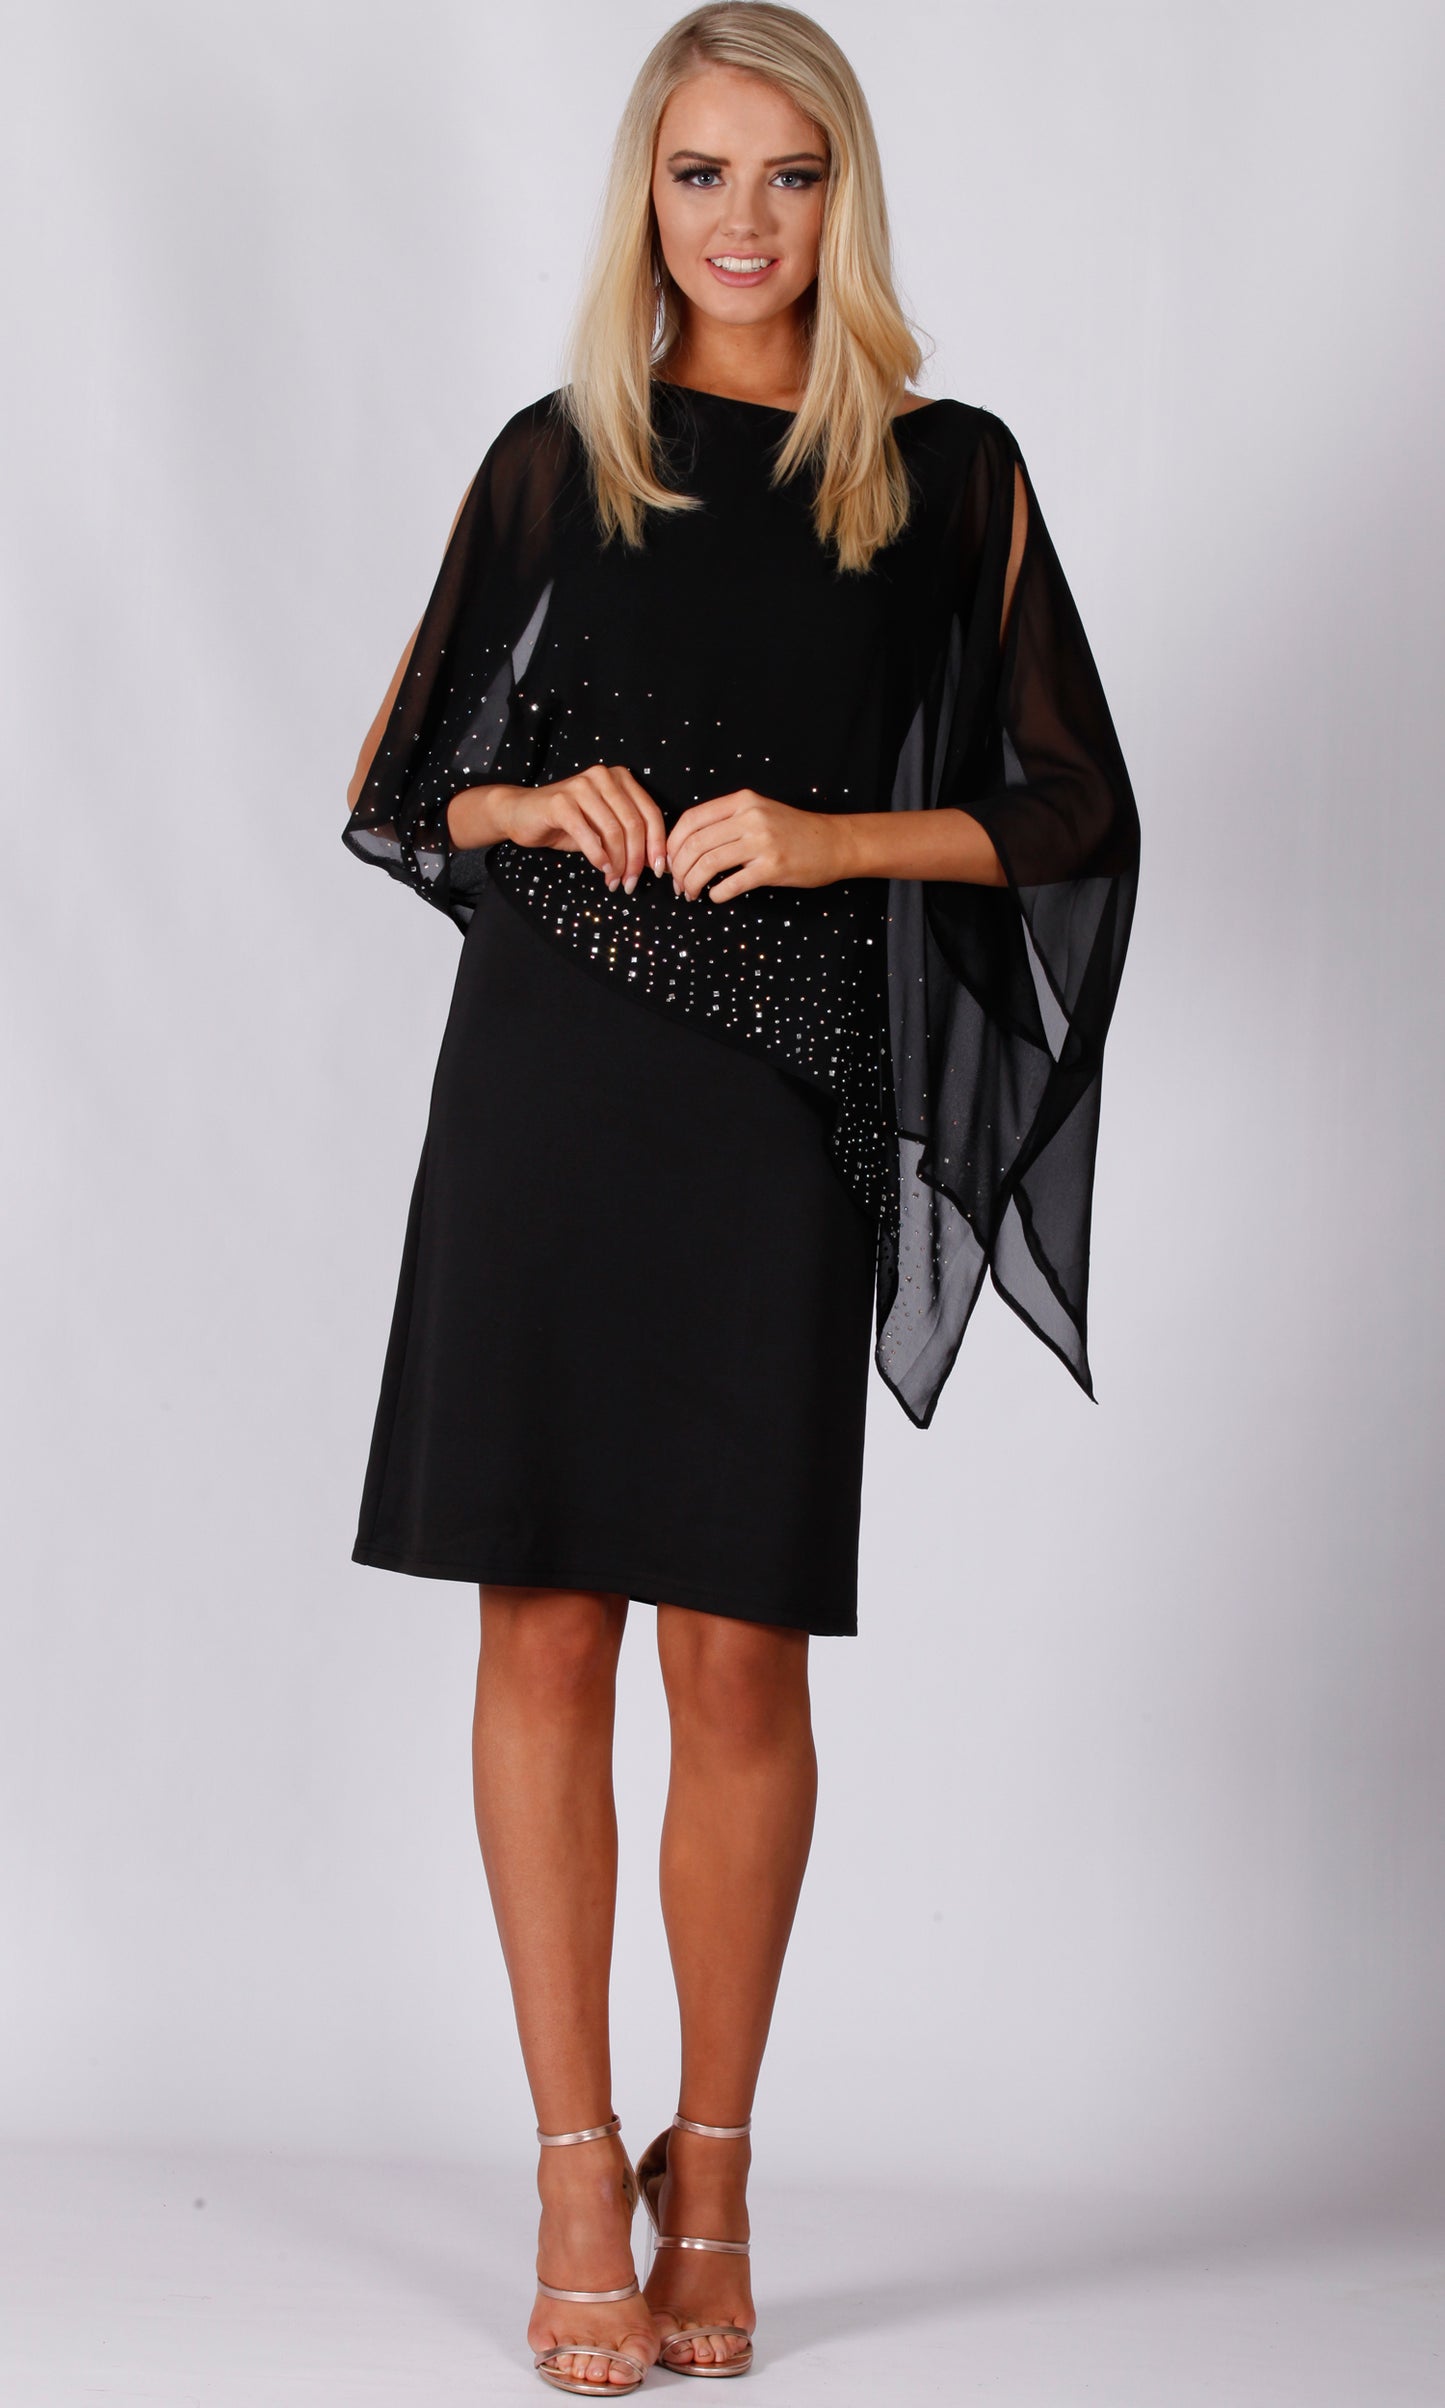 VS7290NC Diamonte Black Chiffon Layer Dress (Pack)